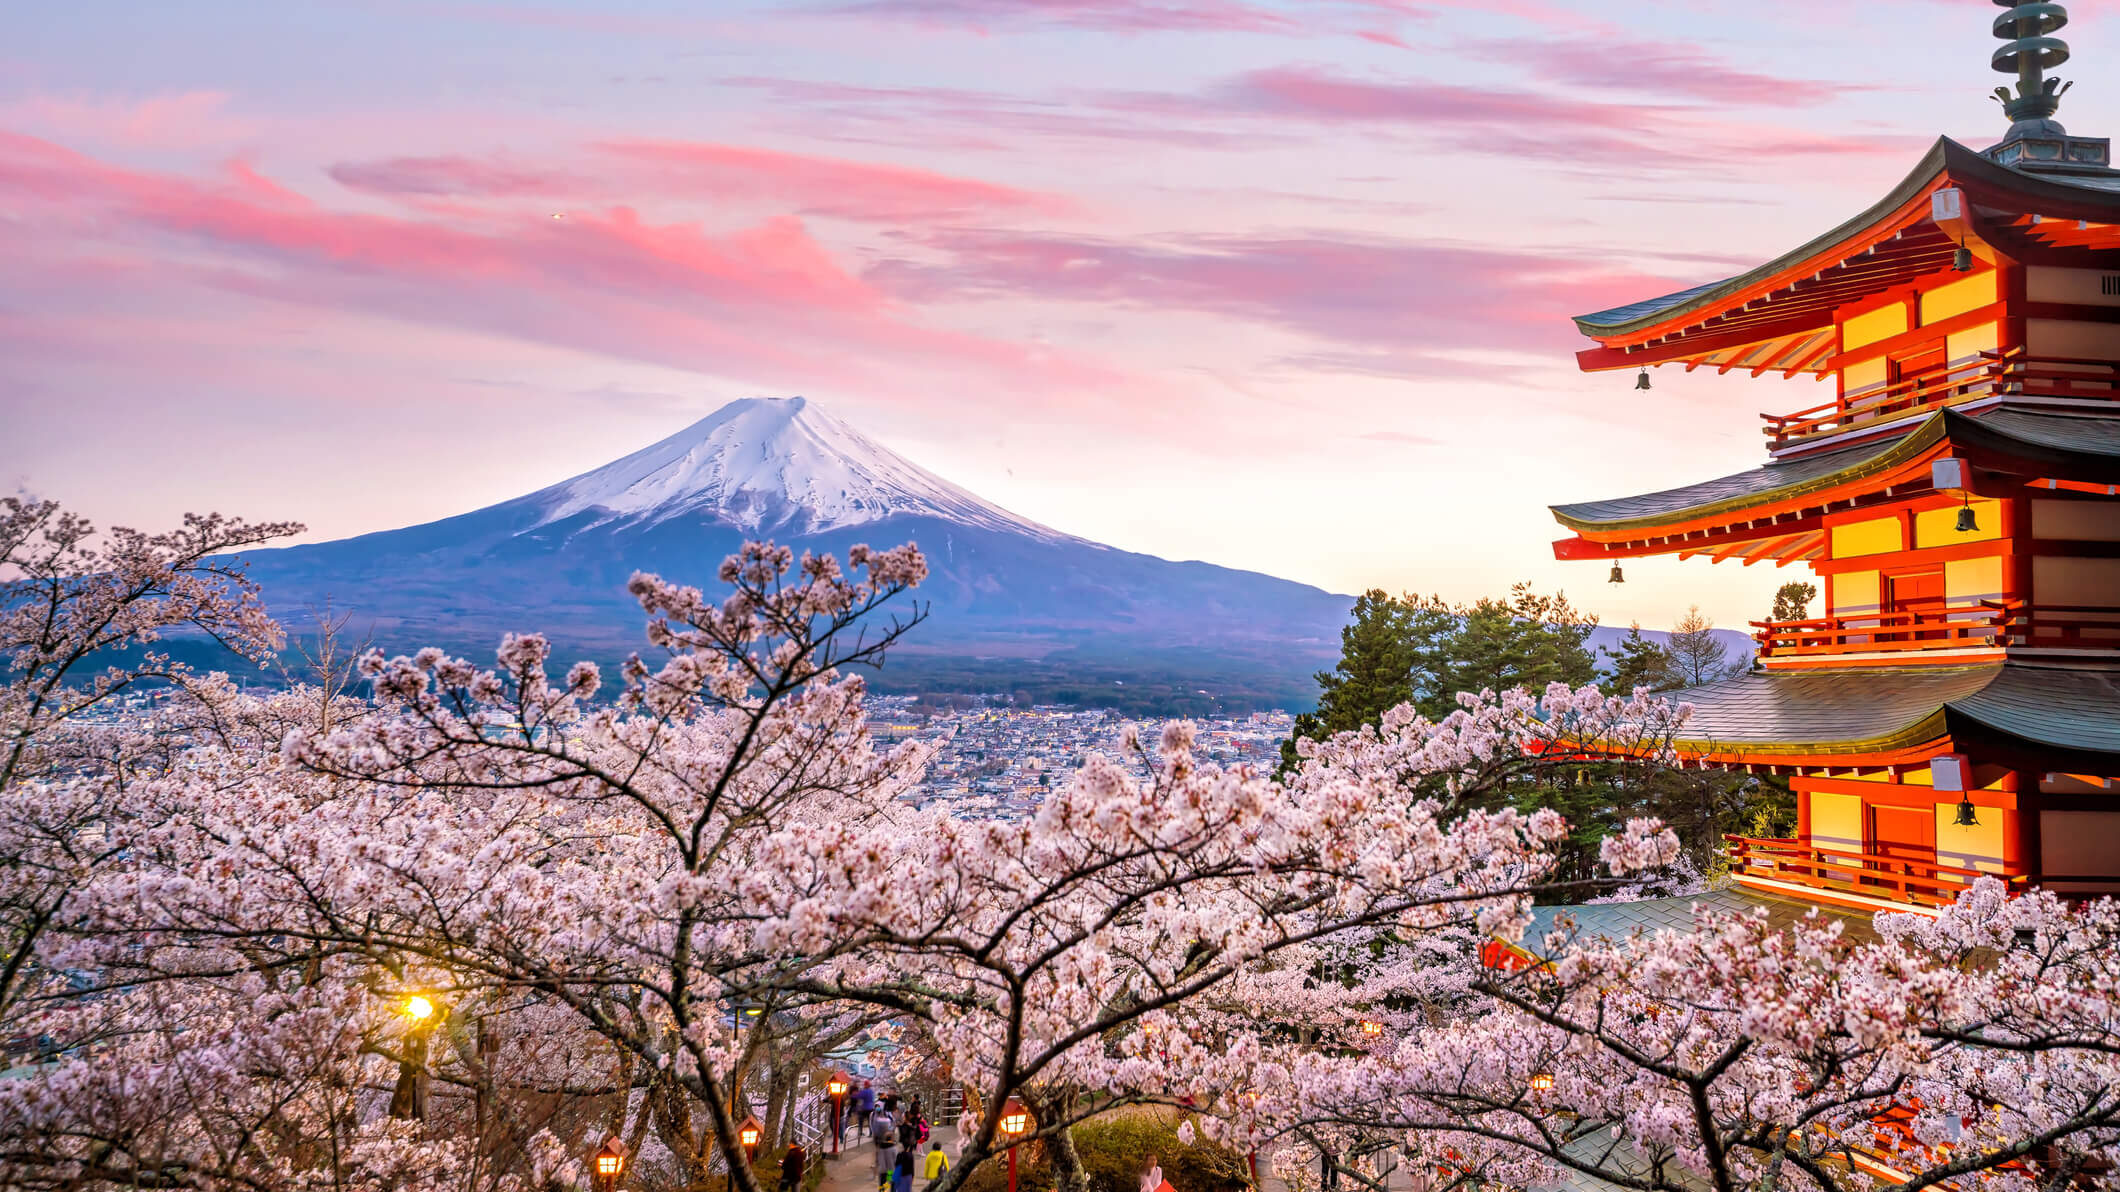 Mount Fuji and Red Pagoda